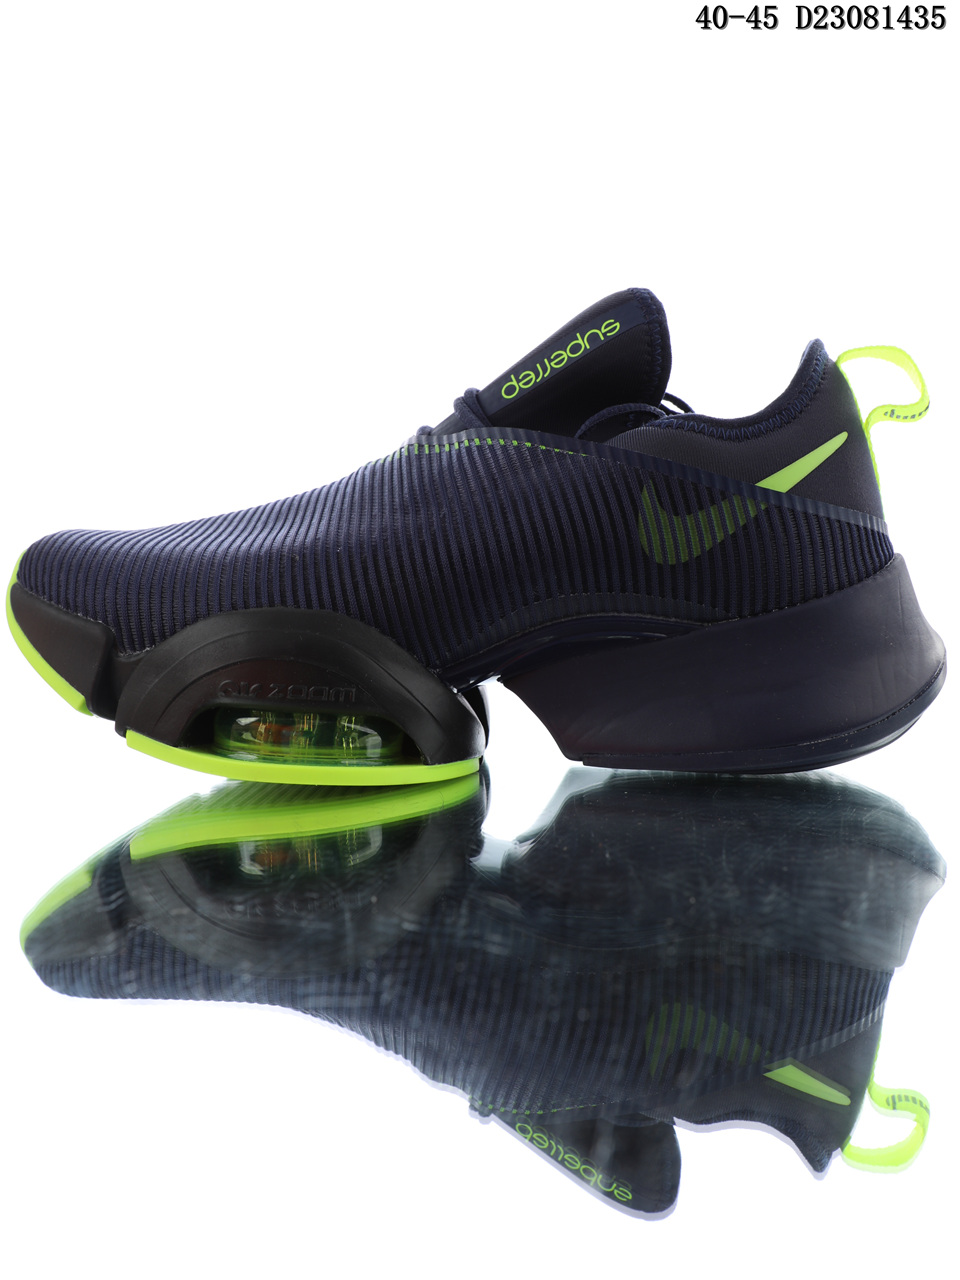 Nike Air Zoom Superrep black green jogging shoes